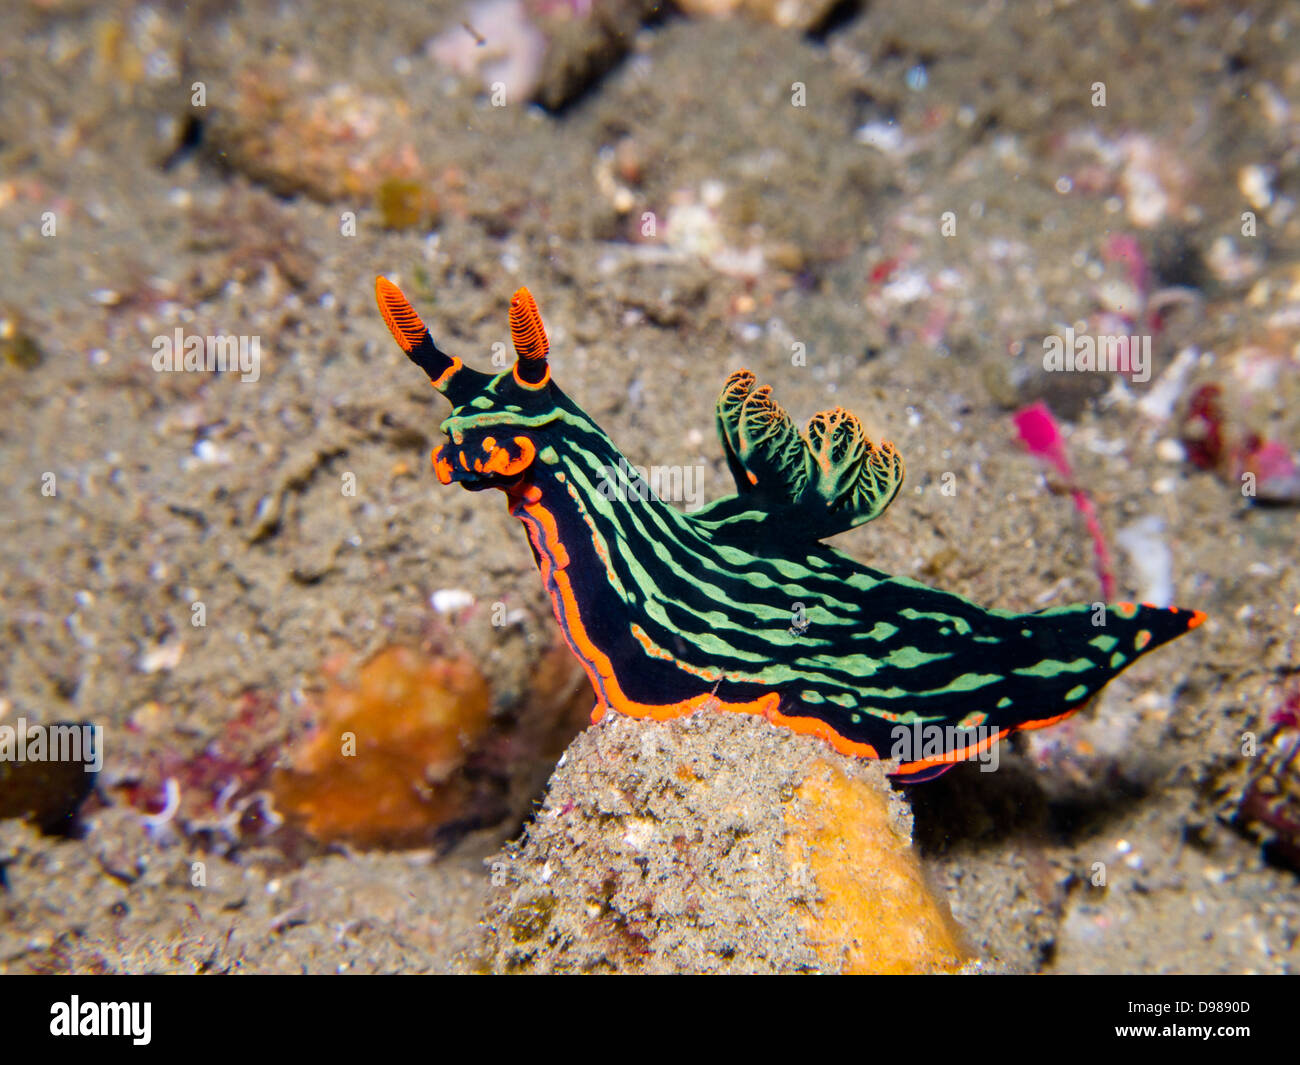 Nembrotha kubaryana nudibranch or sea slug, Ambon, Indonesia Stock Photo